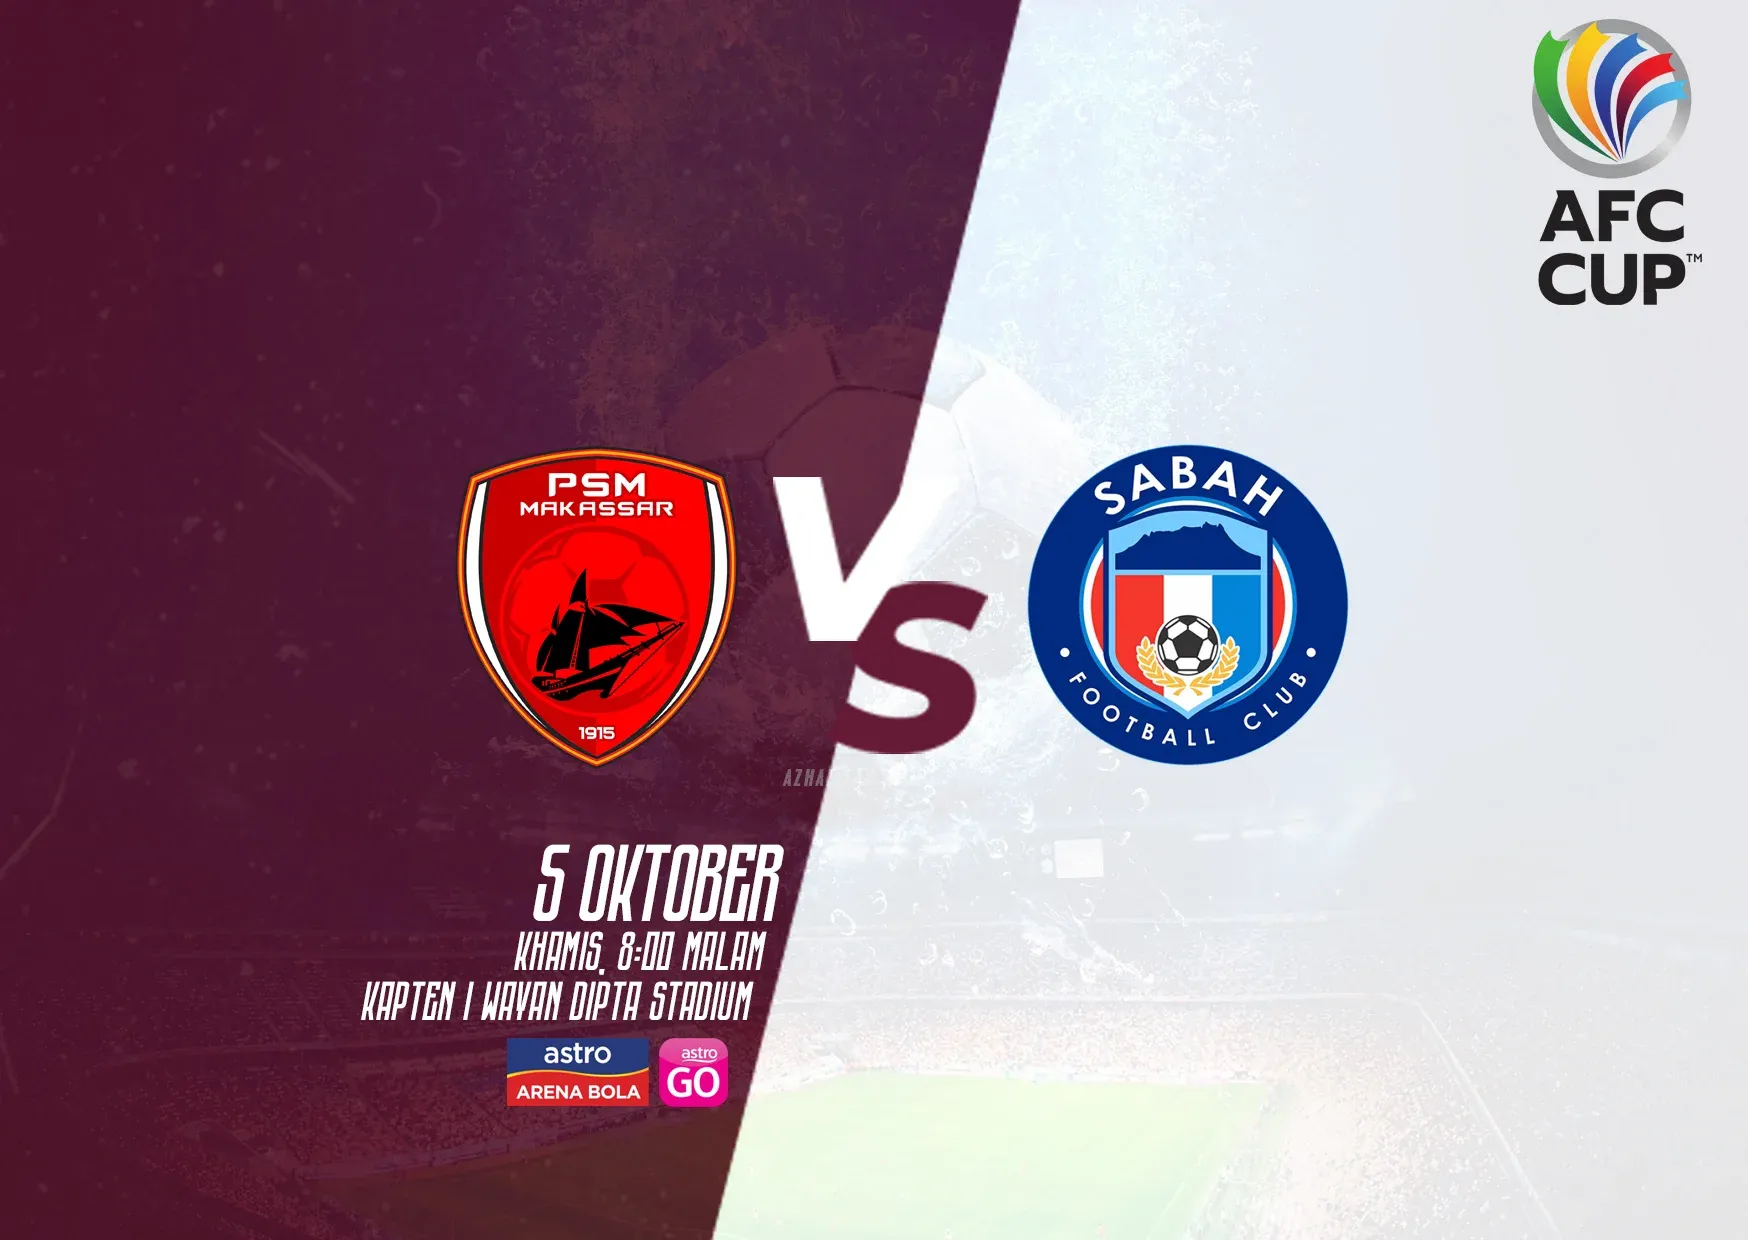 PSM MAKASSAR vs SABAH, Siaran Langsung Live Streaming Score Piala AFC 2023